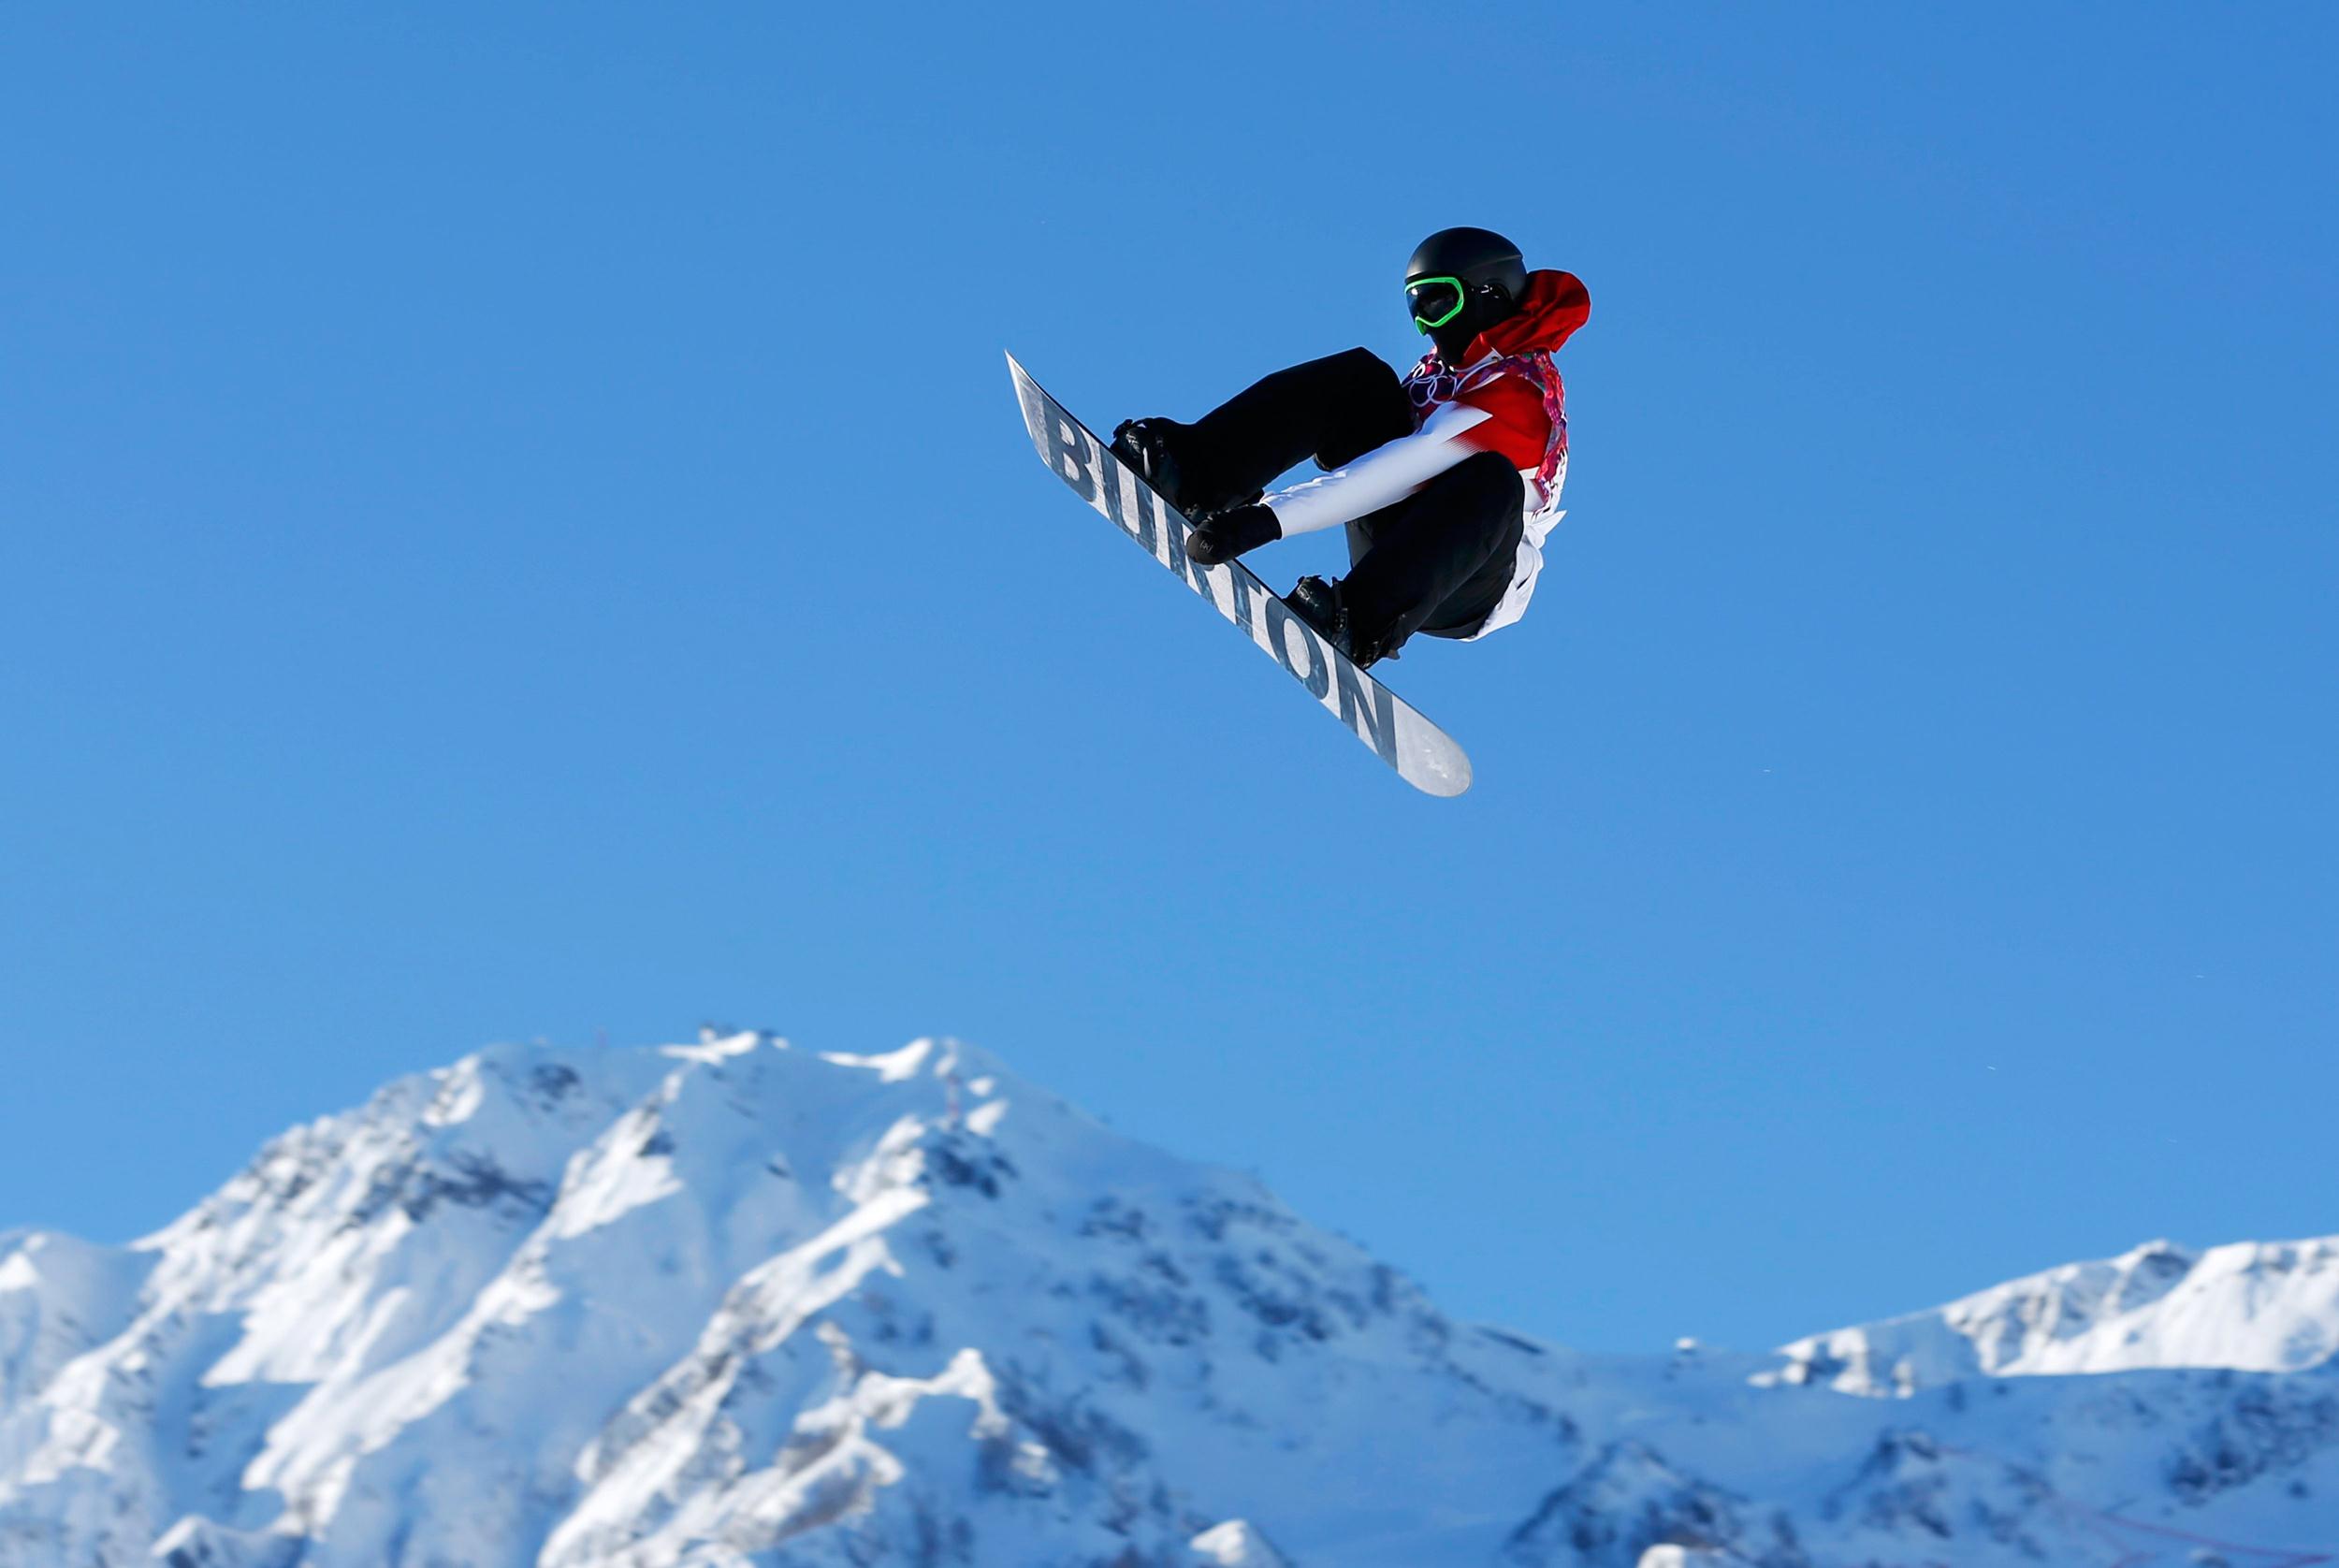 Snowboard Makers Gain Precious Air With Creative Spin